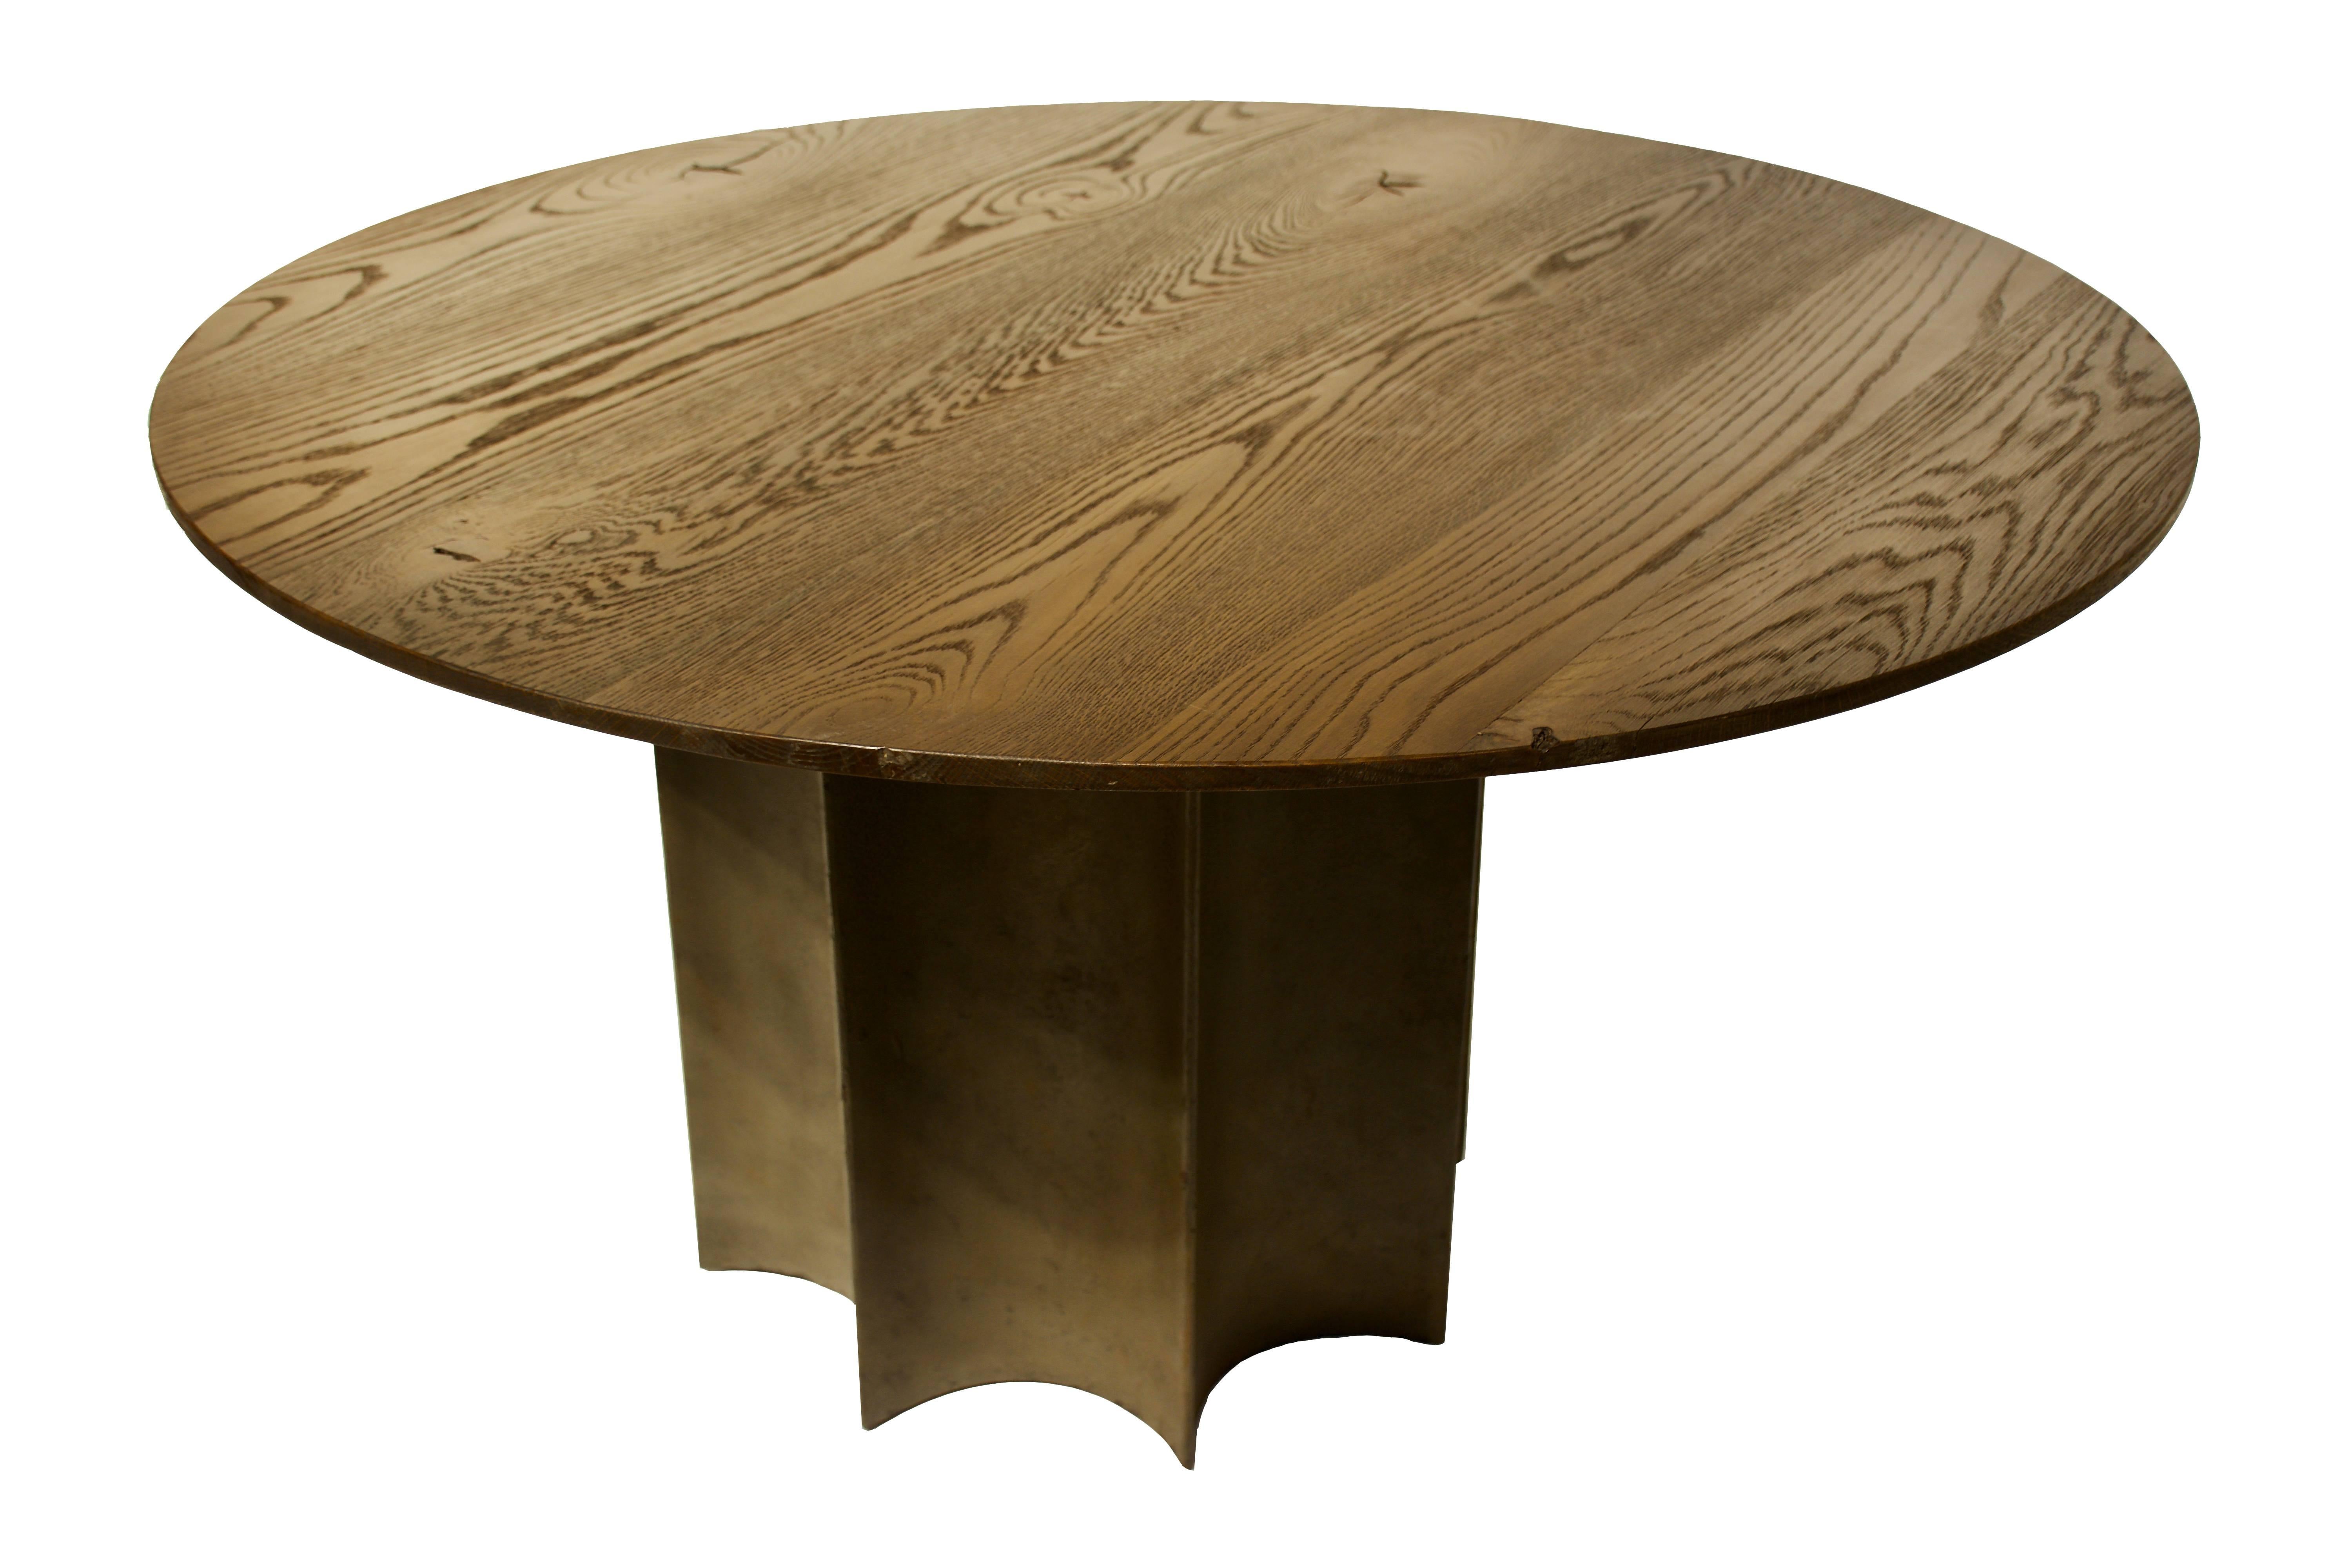 White oak top, steel base dining table.